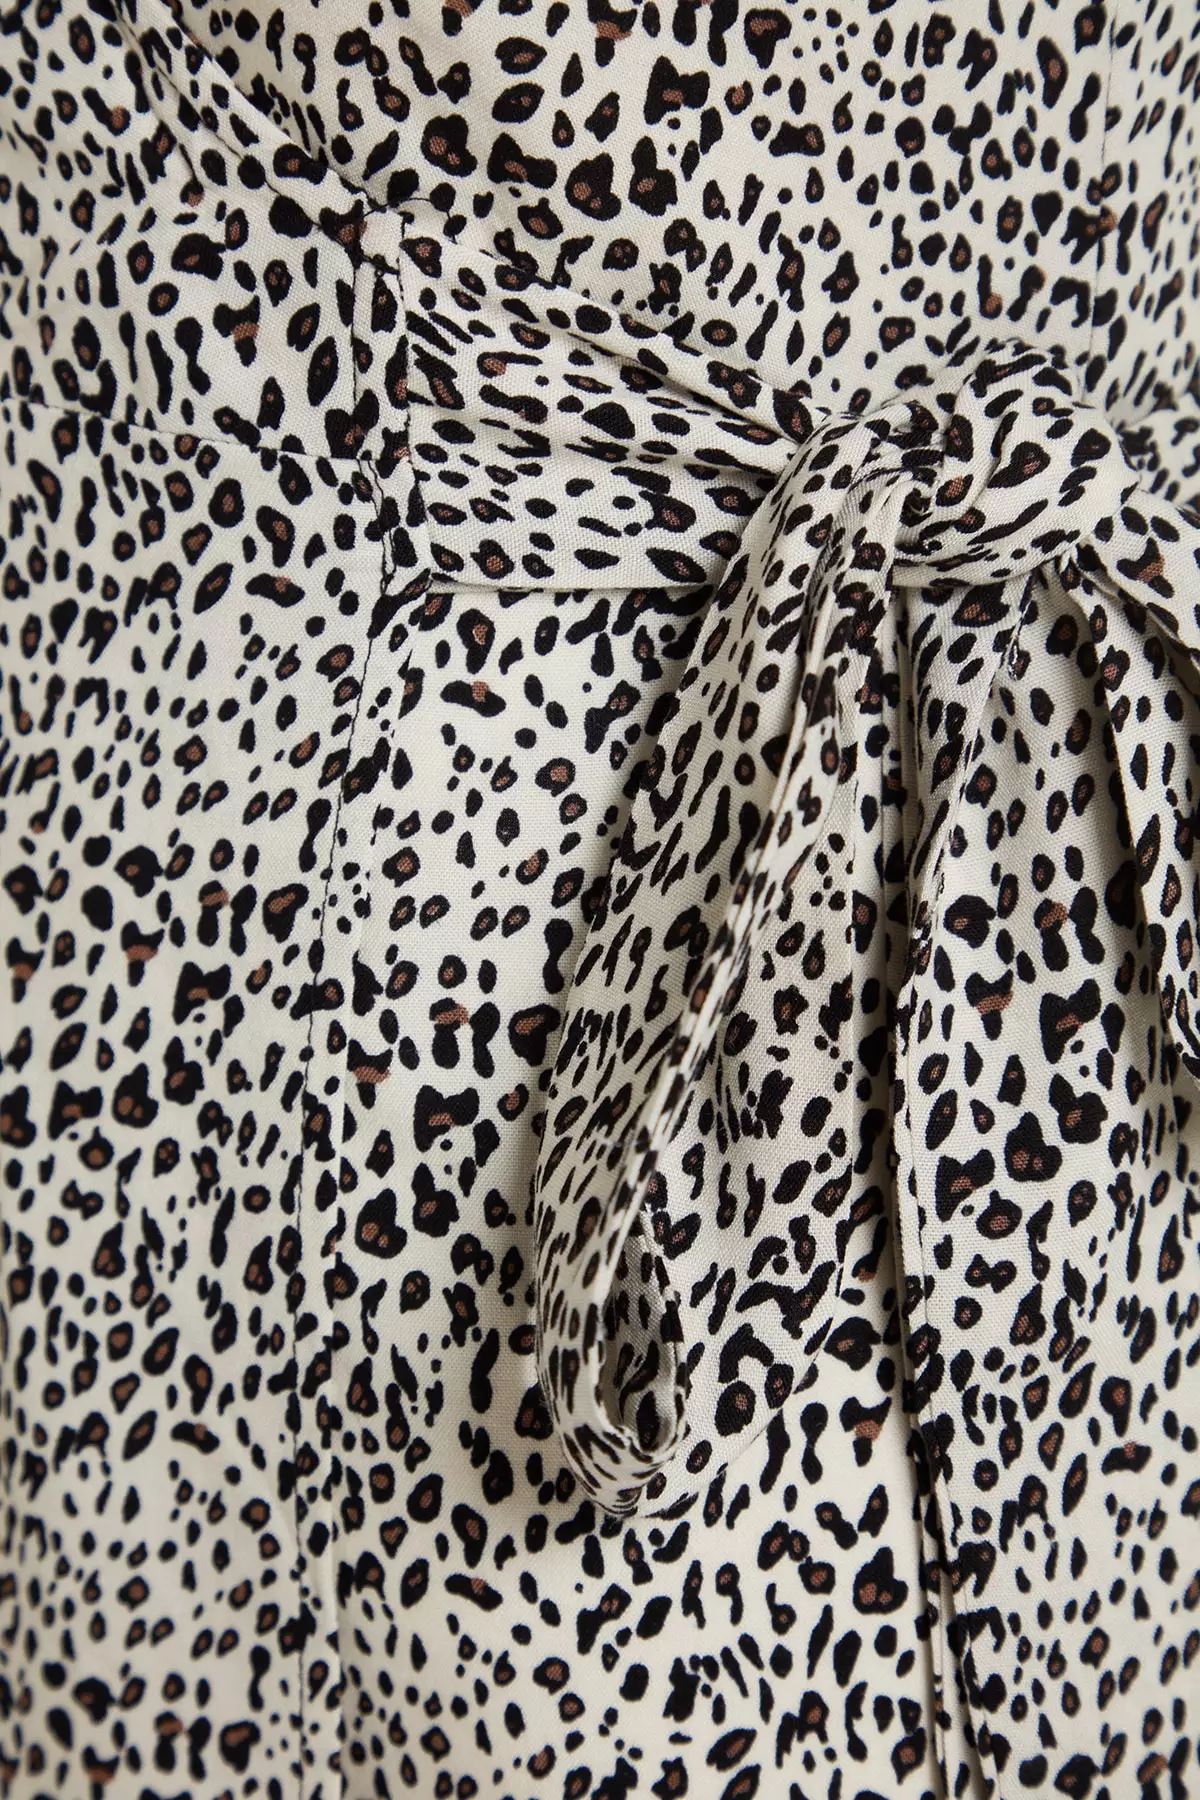 Ecru Double Breasted Midi Weave Leopard Print Dress